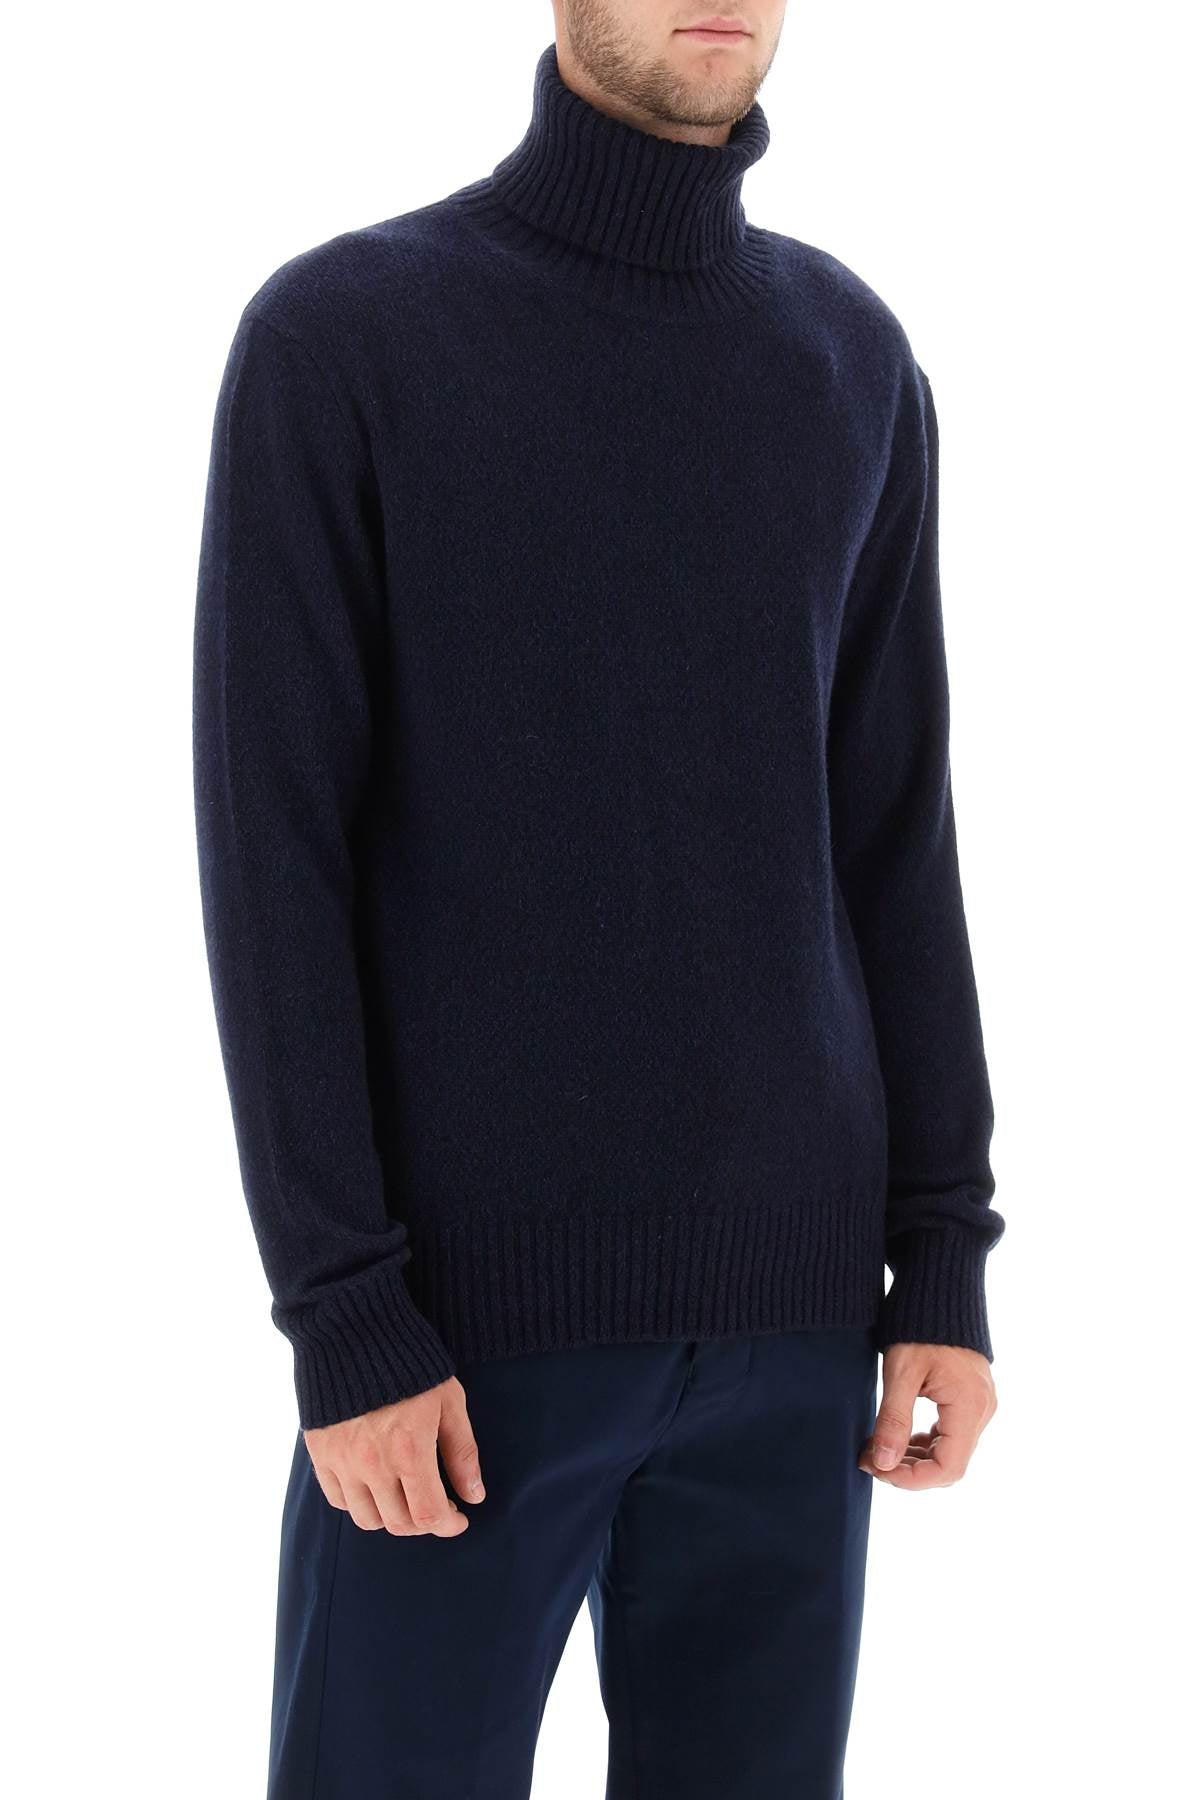 Ami Alexandre Mattiussi Ami paris melange-effect cashmere turtleneck sweater